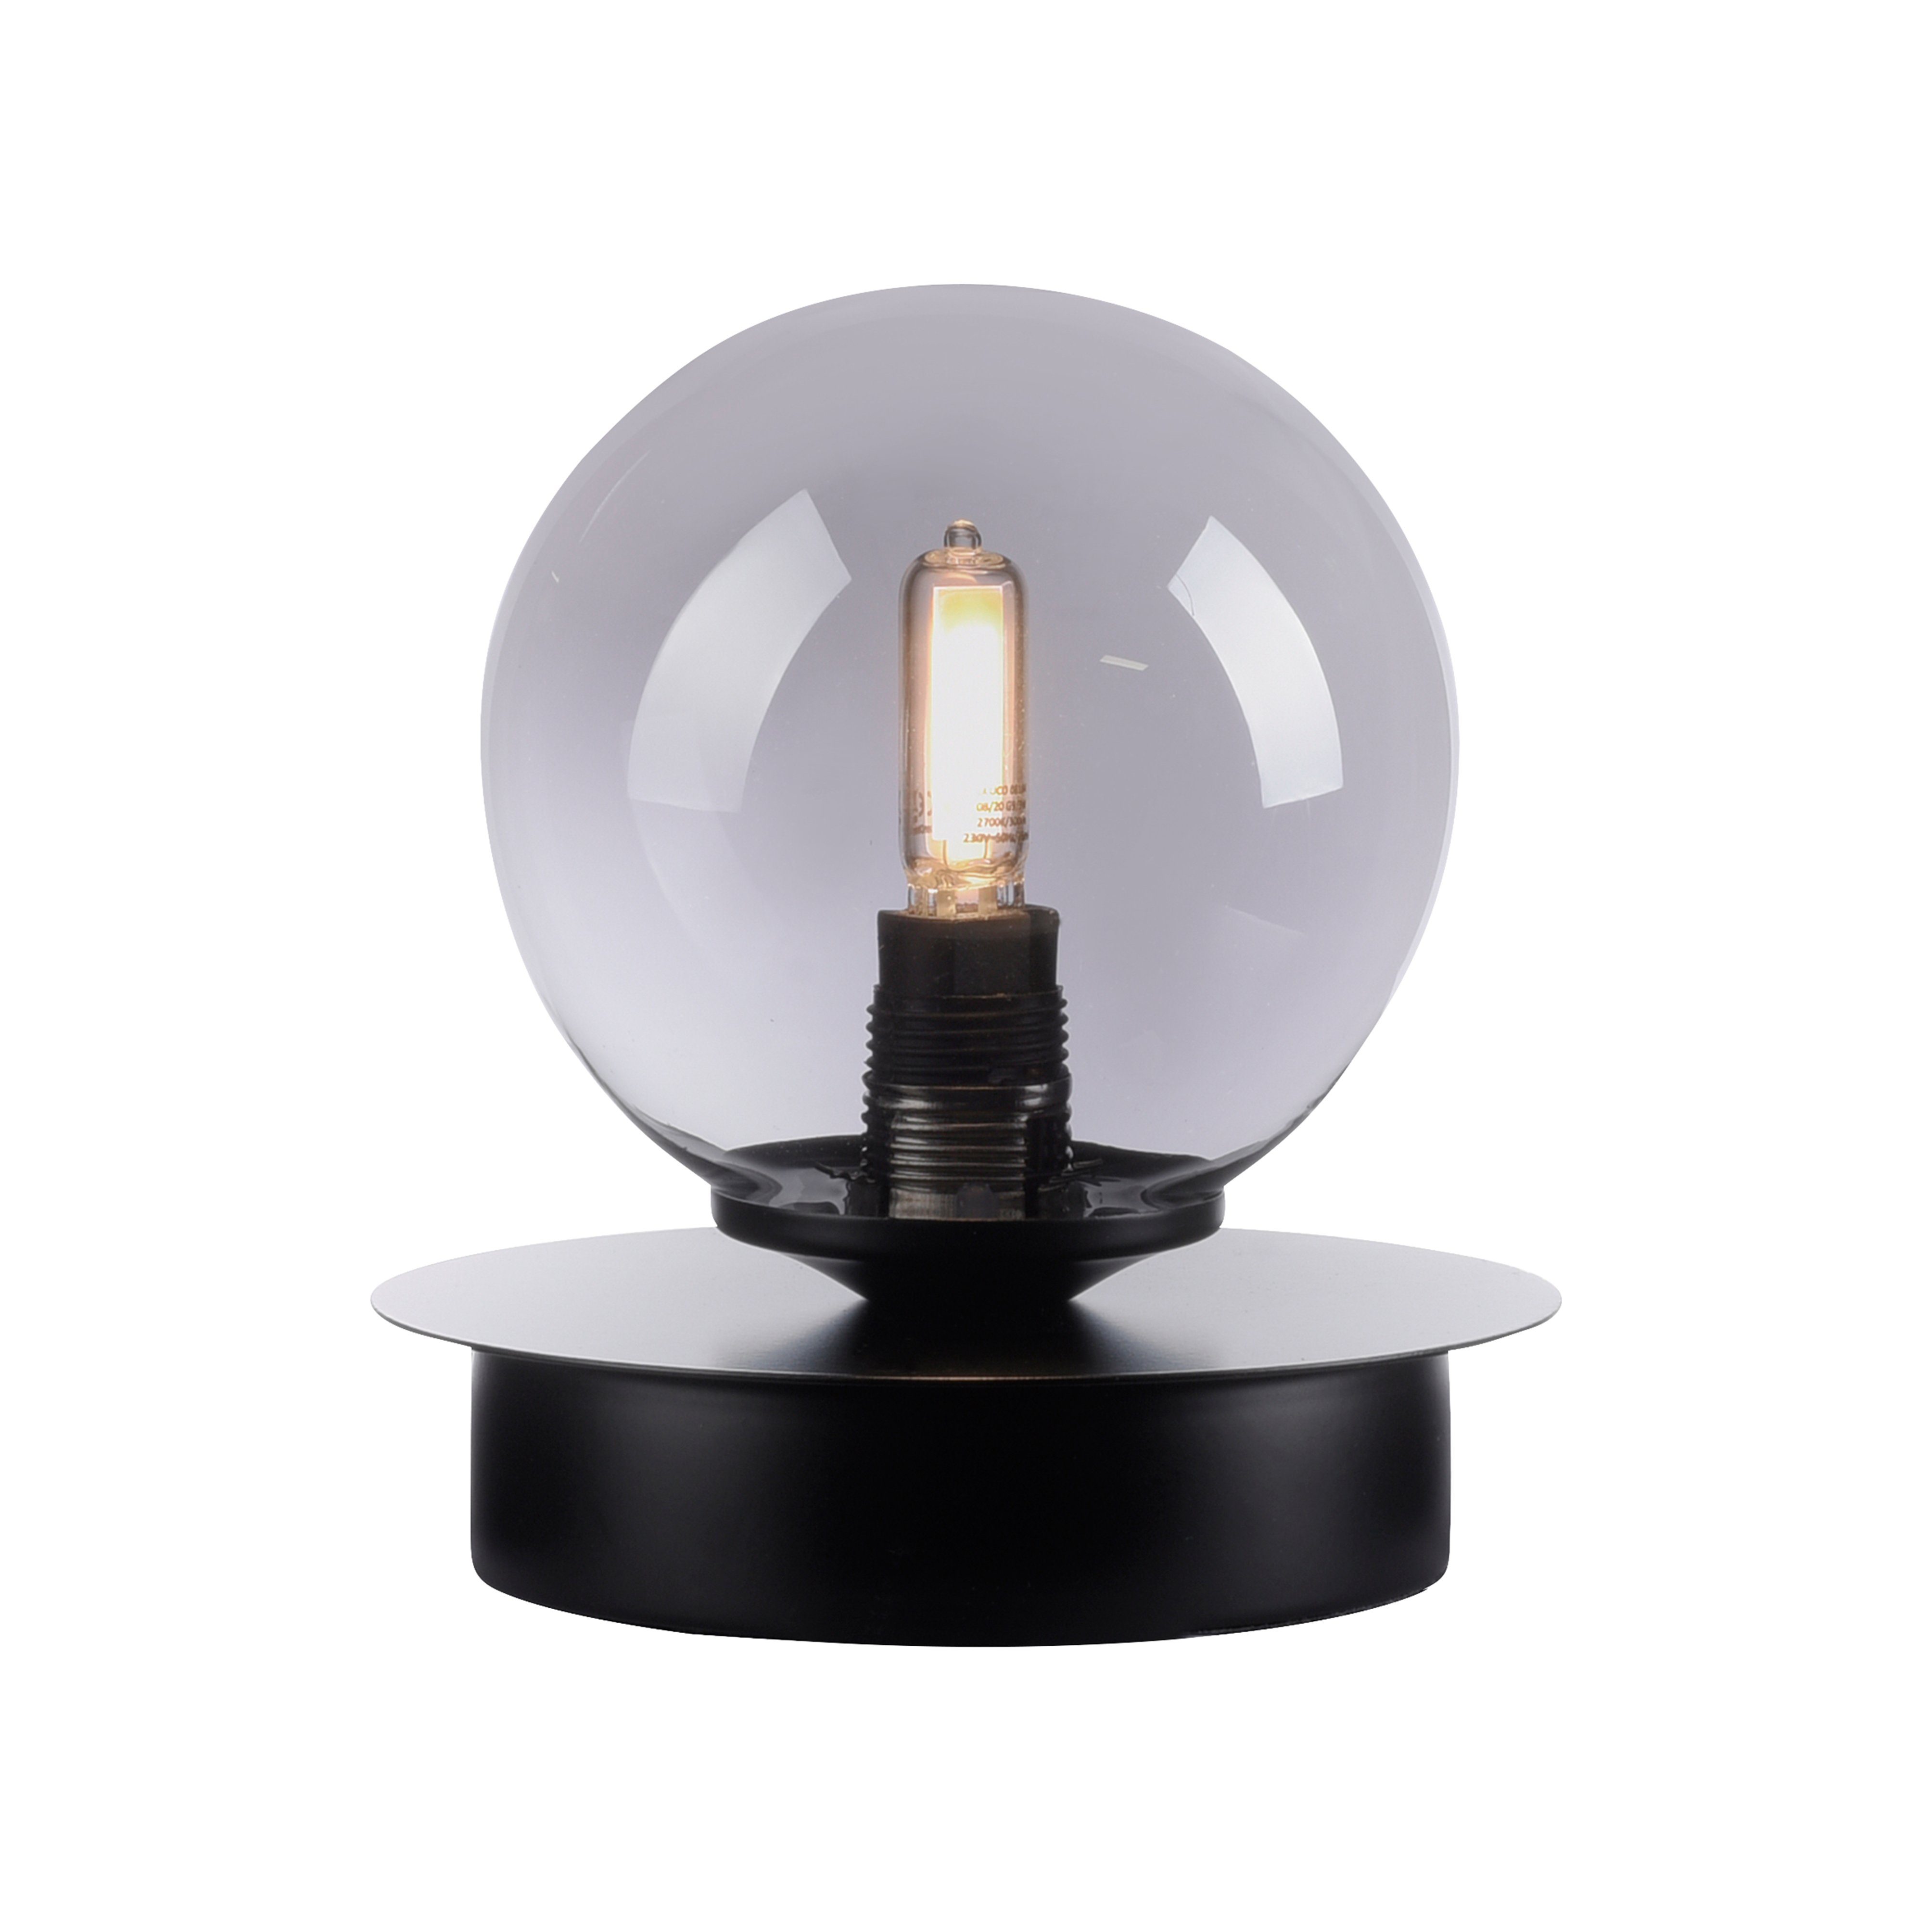 Warmweiß, Nachttischlampe Paul LED Schnurschalter wechselbar, WIDOW, LED Schalter, Neuhaus